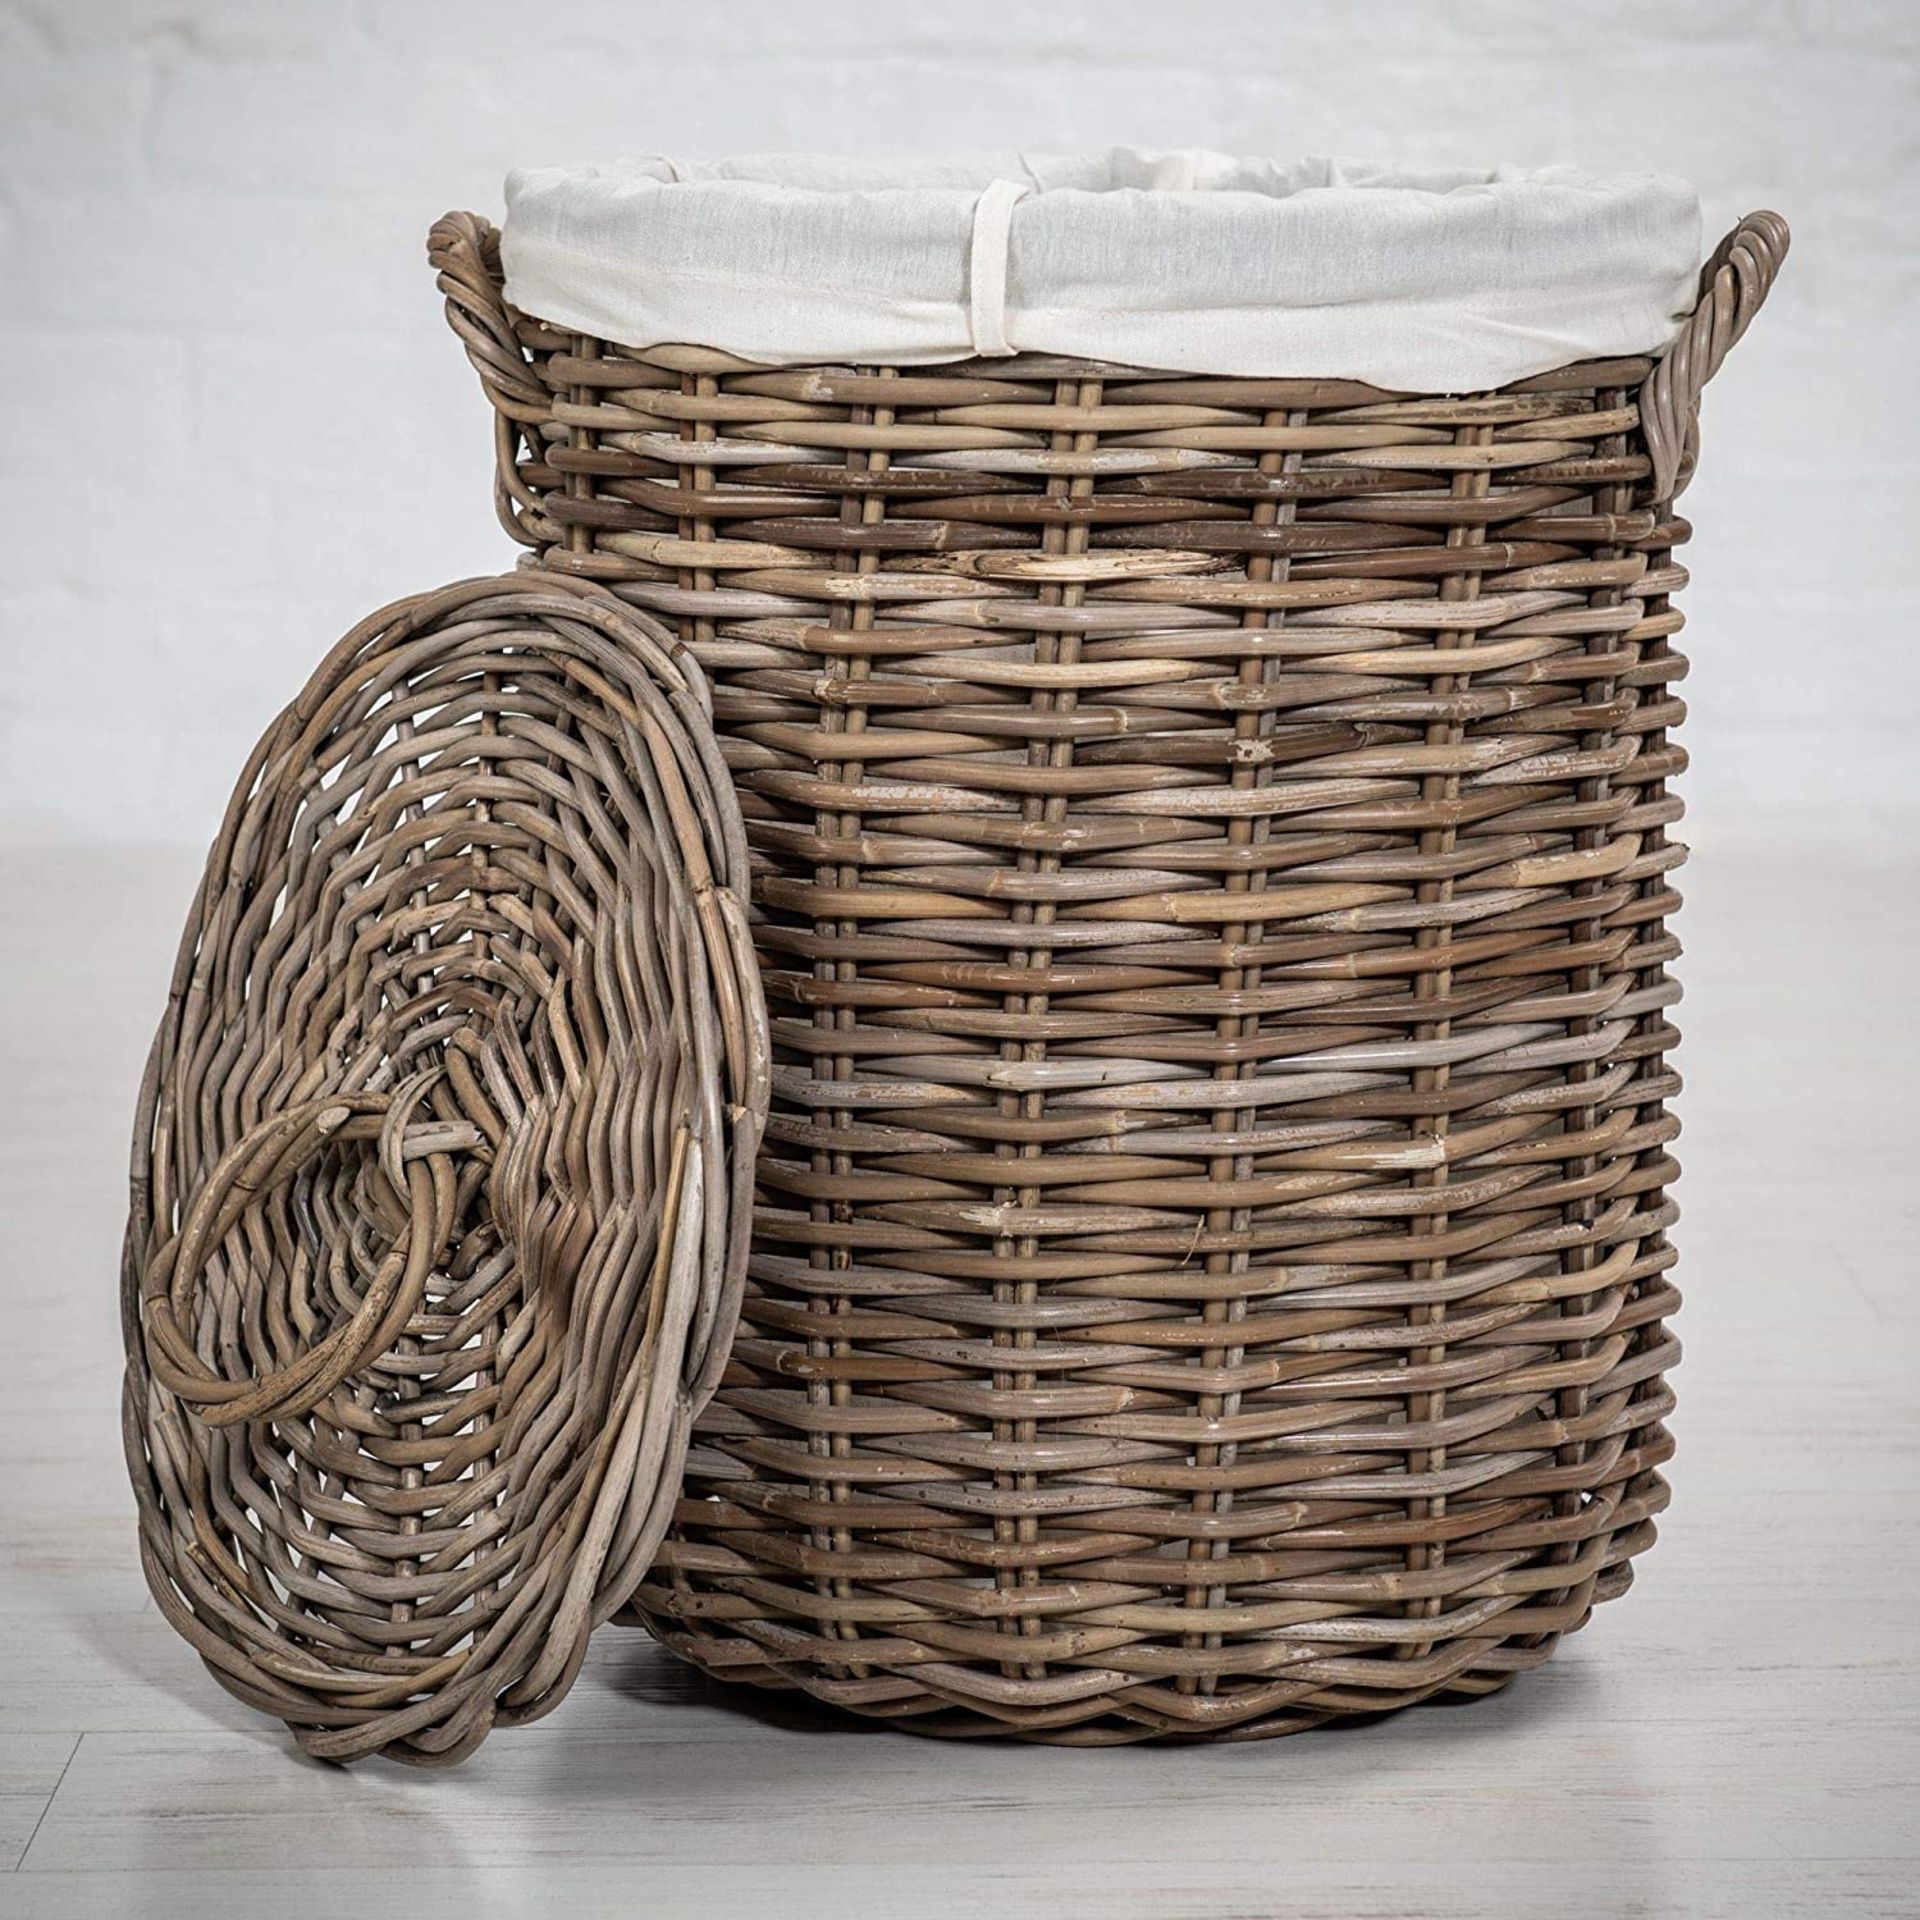 New & Boxed Maine Furniture Co Laundry Basket, Natural Rattan, 55 x 40 x 40 cm. (SR5). (SKU: